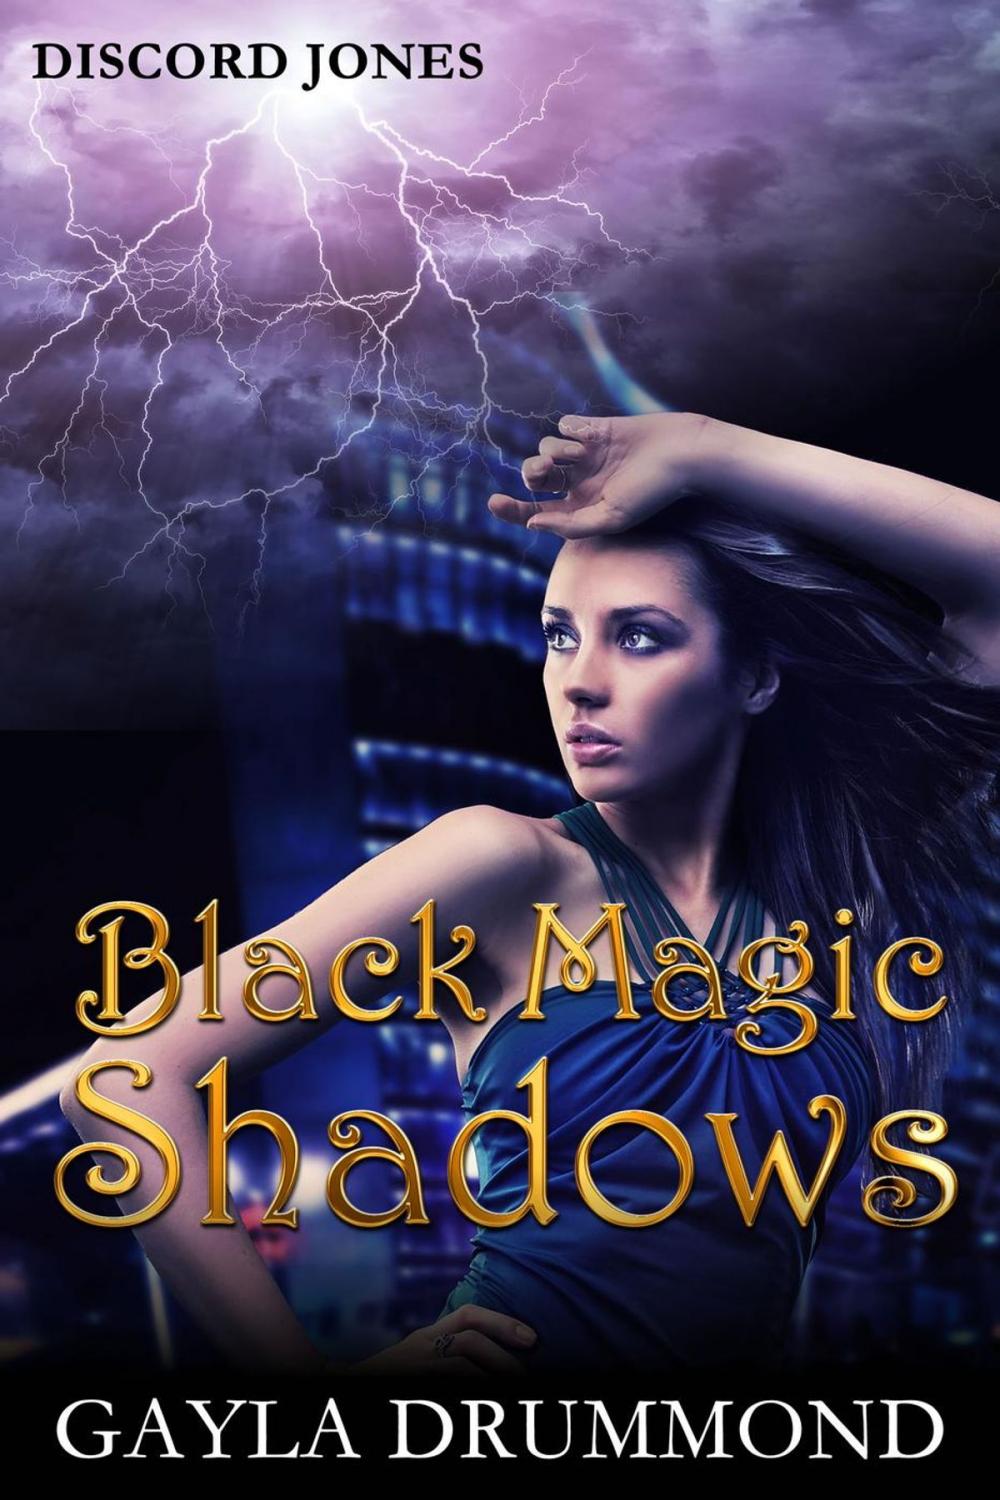 Big bigCover of Black Magic Shadows